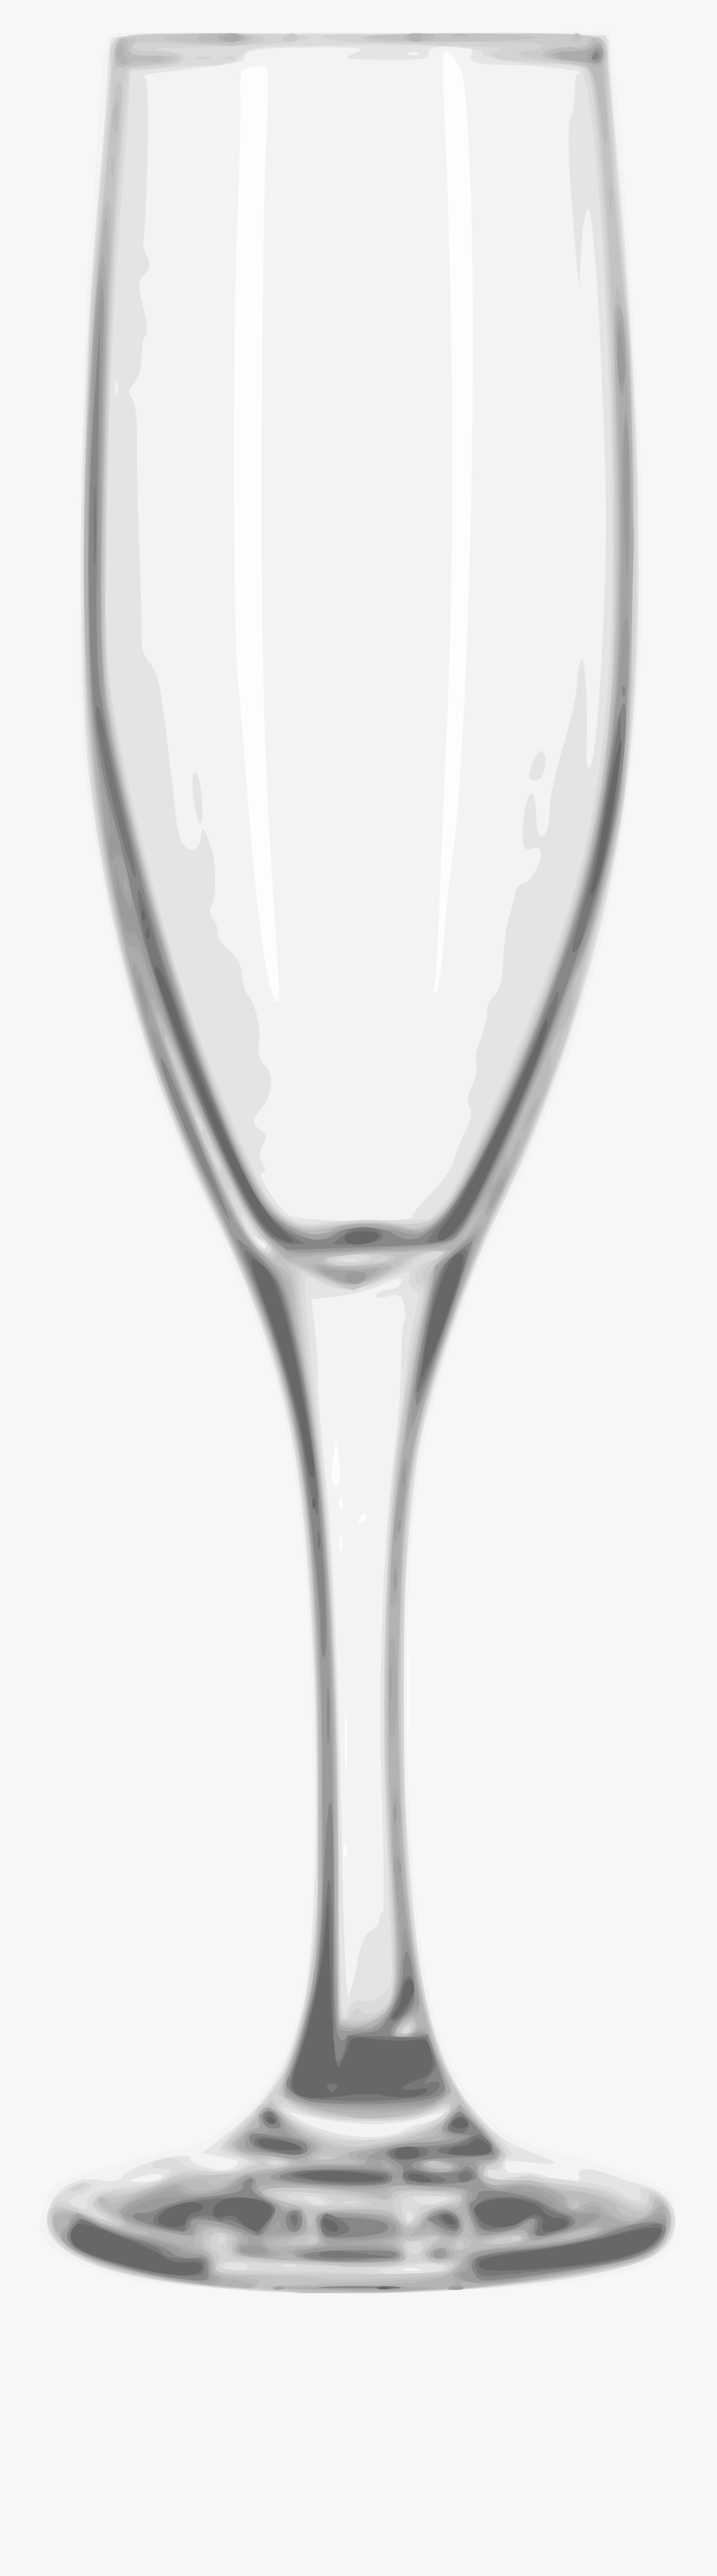 2000px Flute Glass Svg - Champagne Flute Glass Png, Transparent Clipart